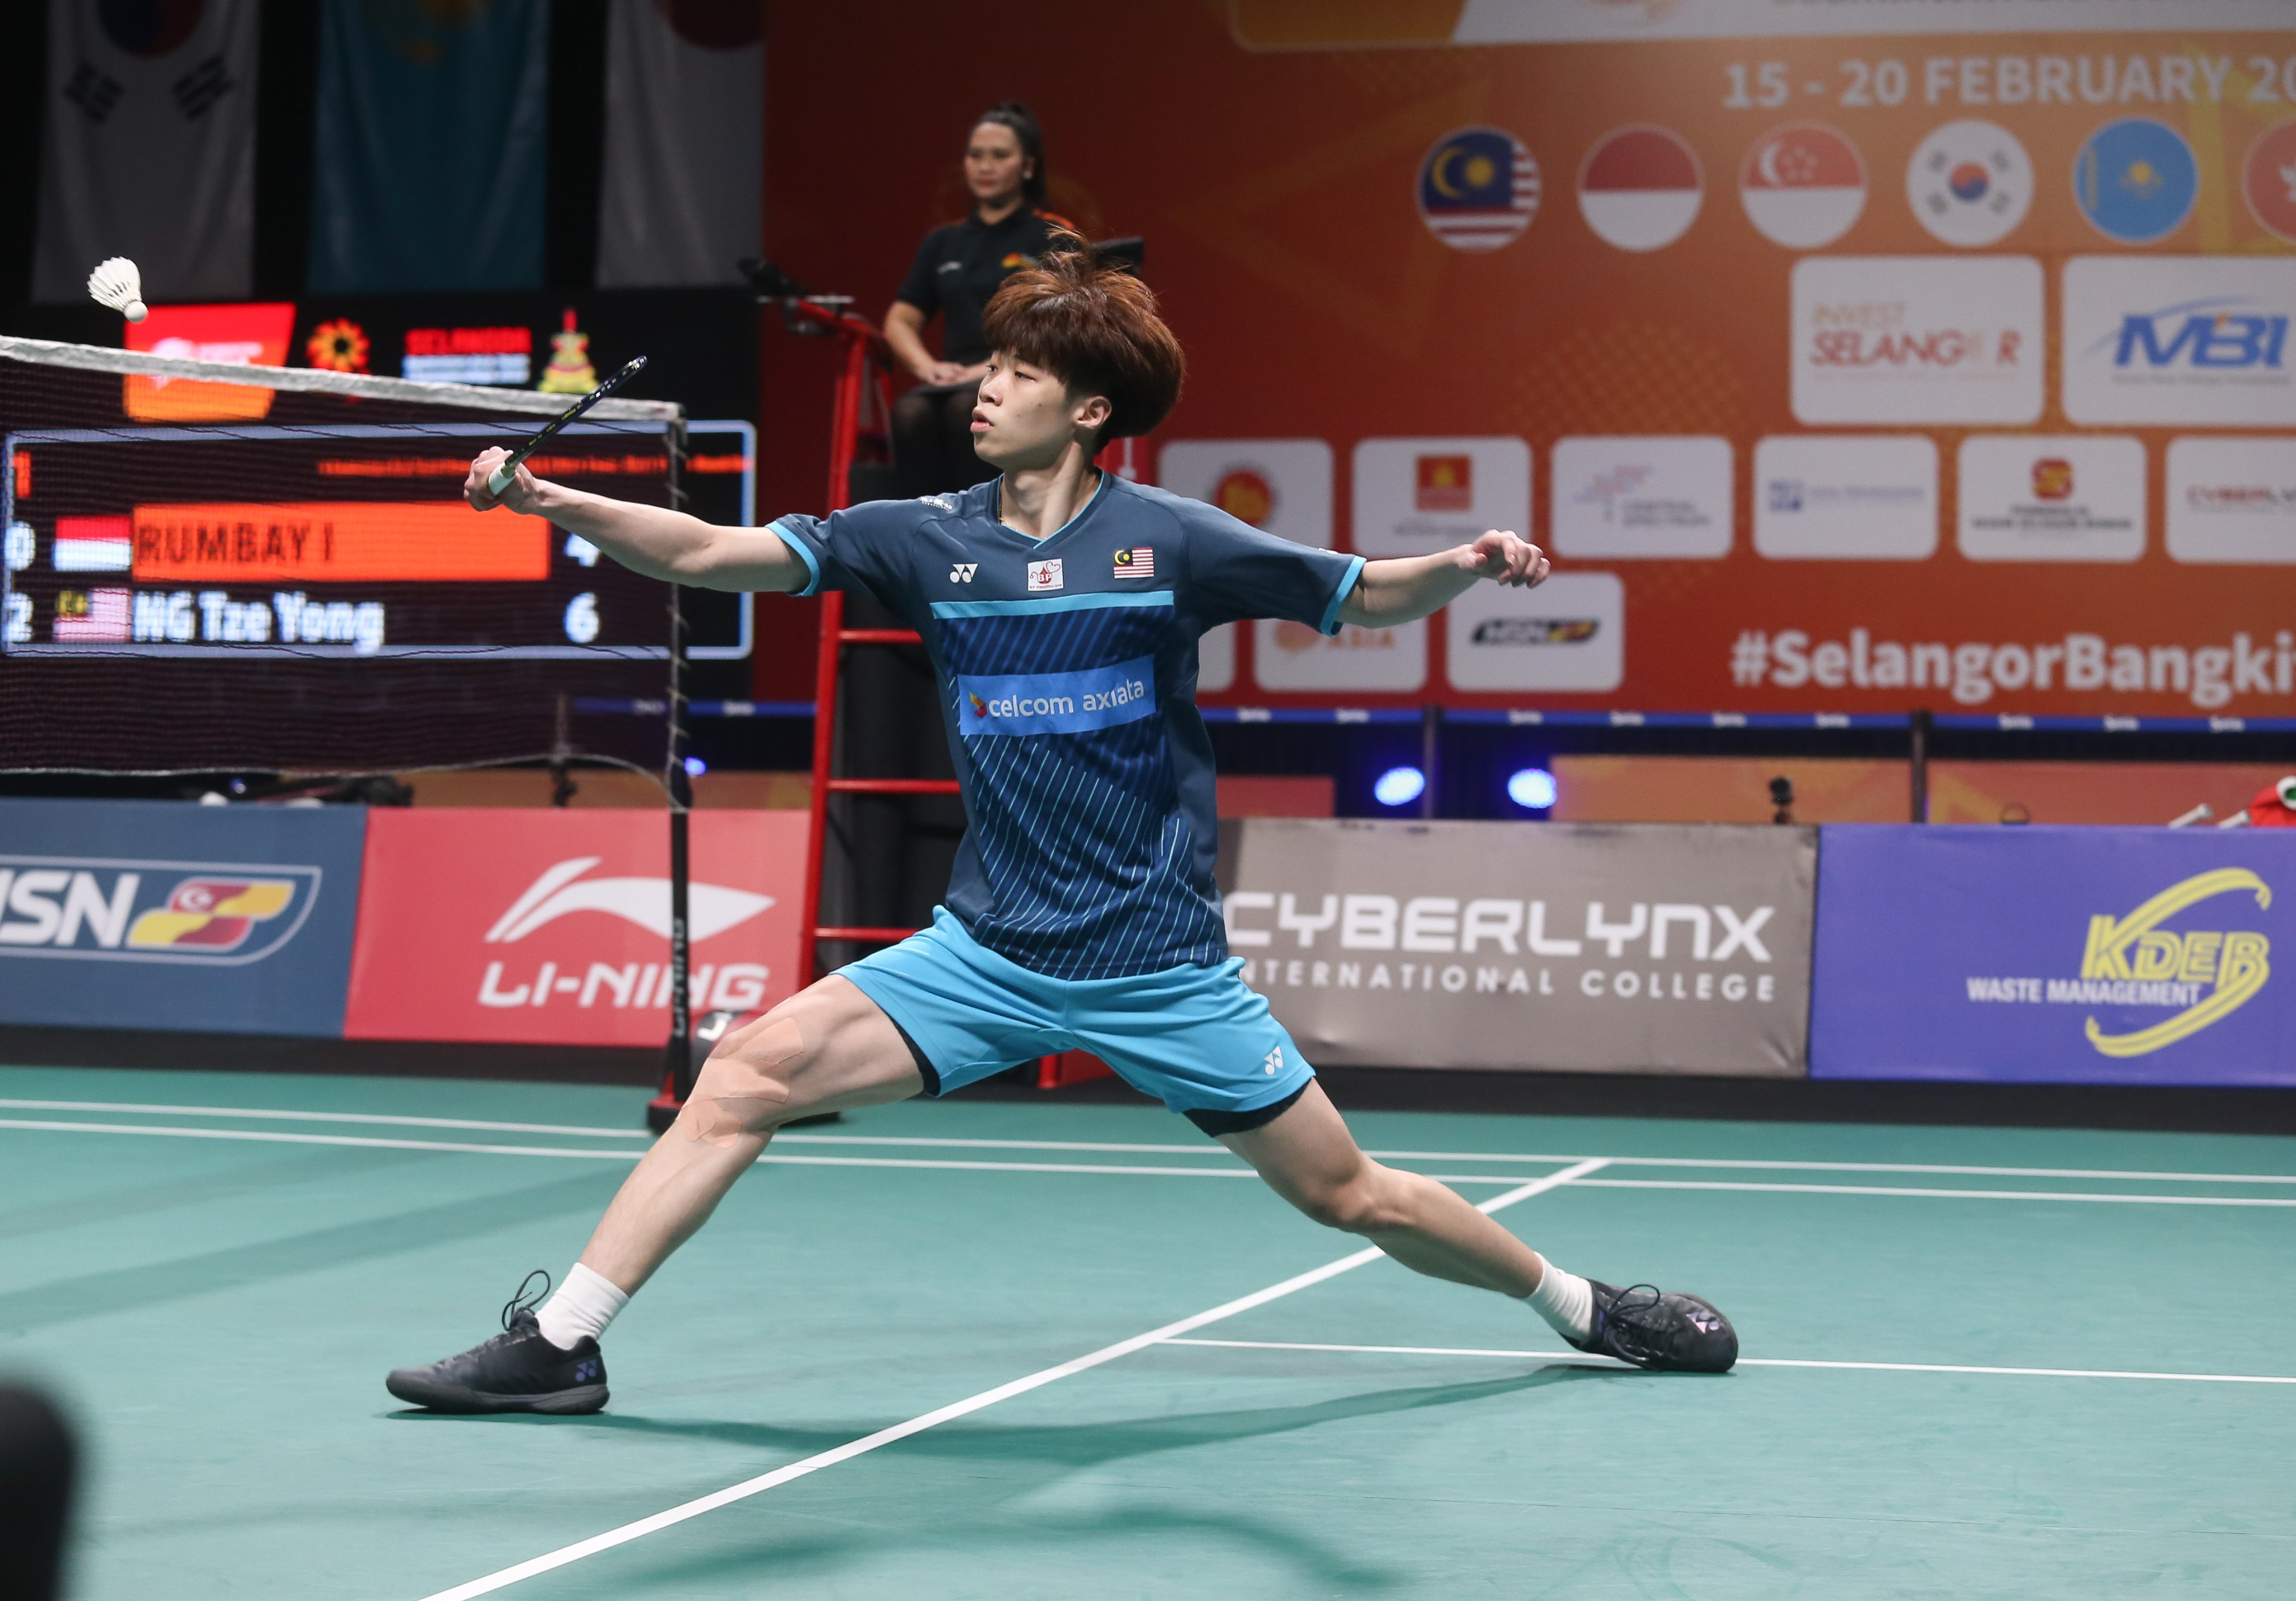 Badminton malaysia vs indonesia